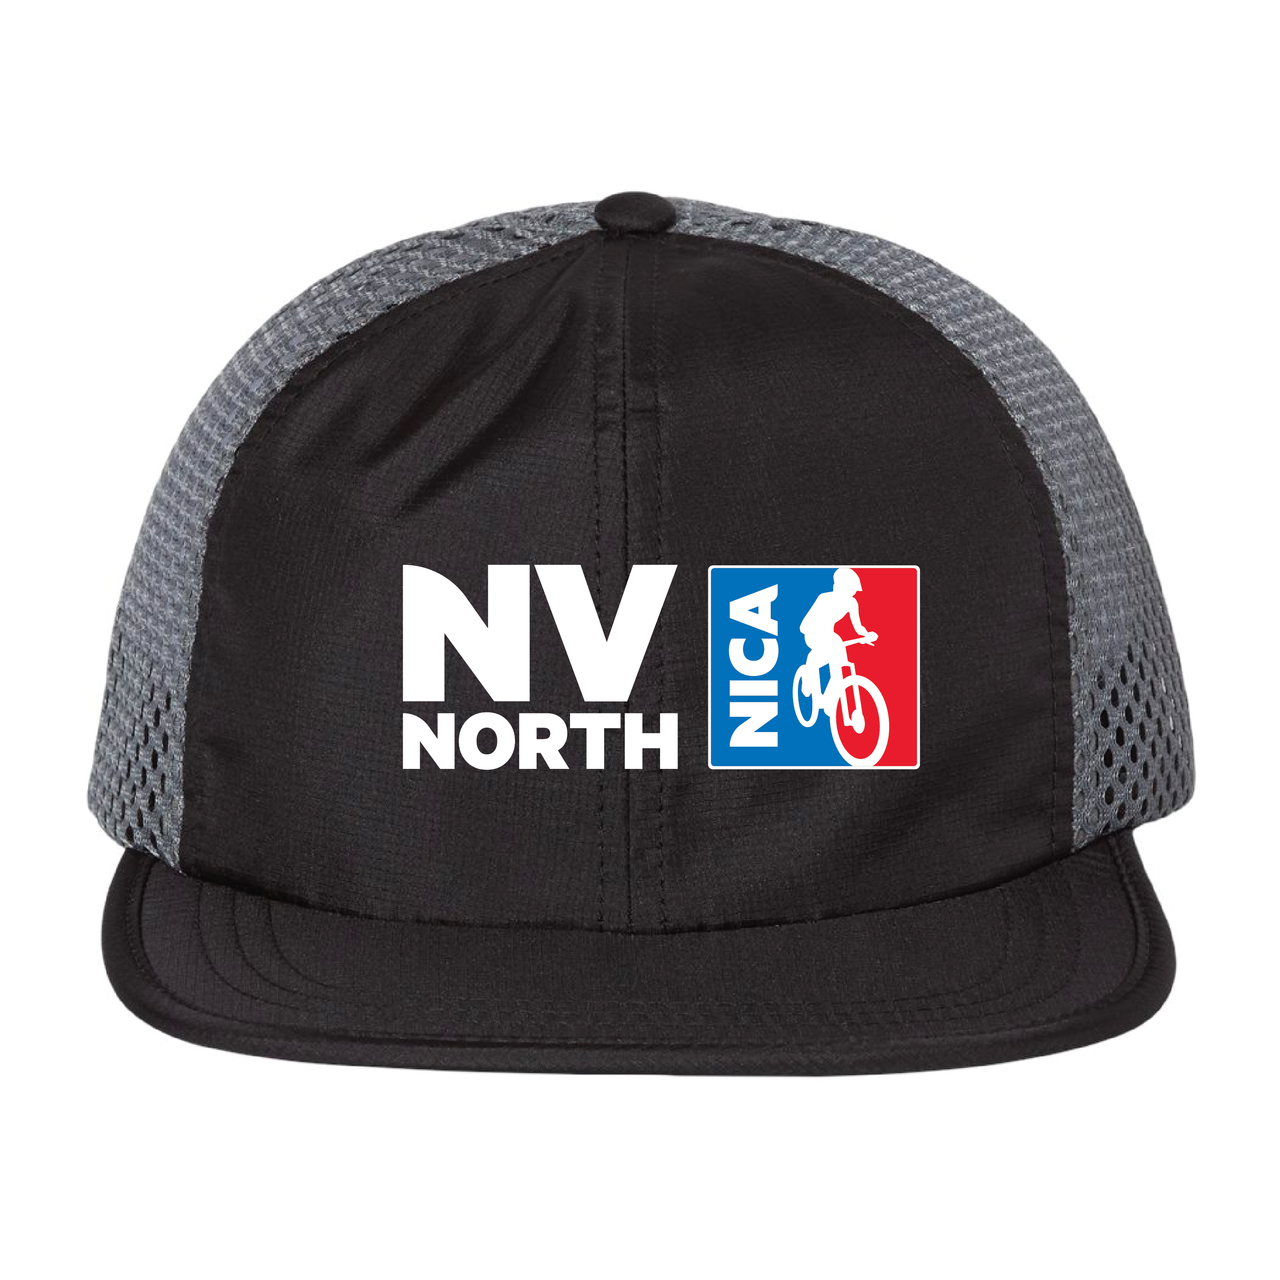 Nevada North NICA Mesh Hat